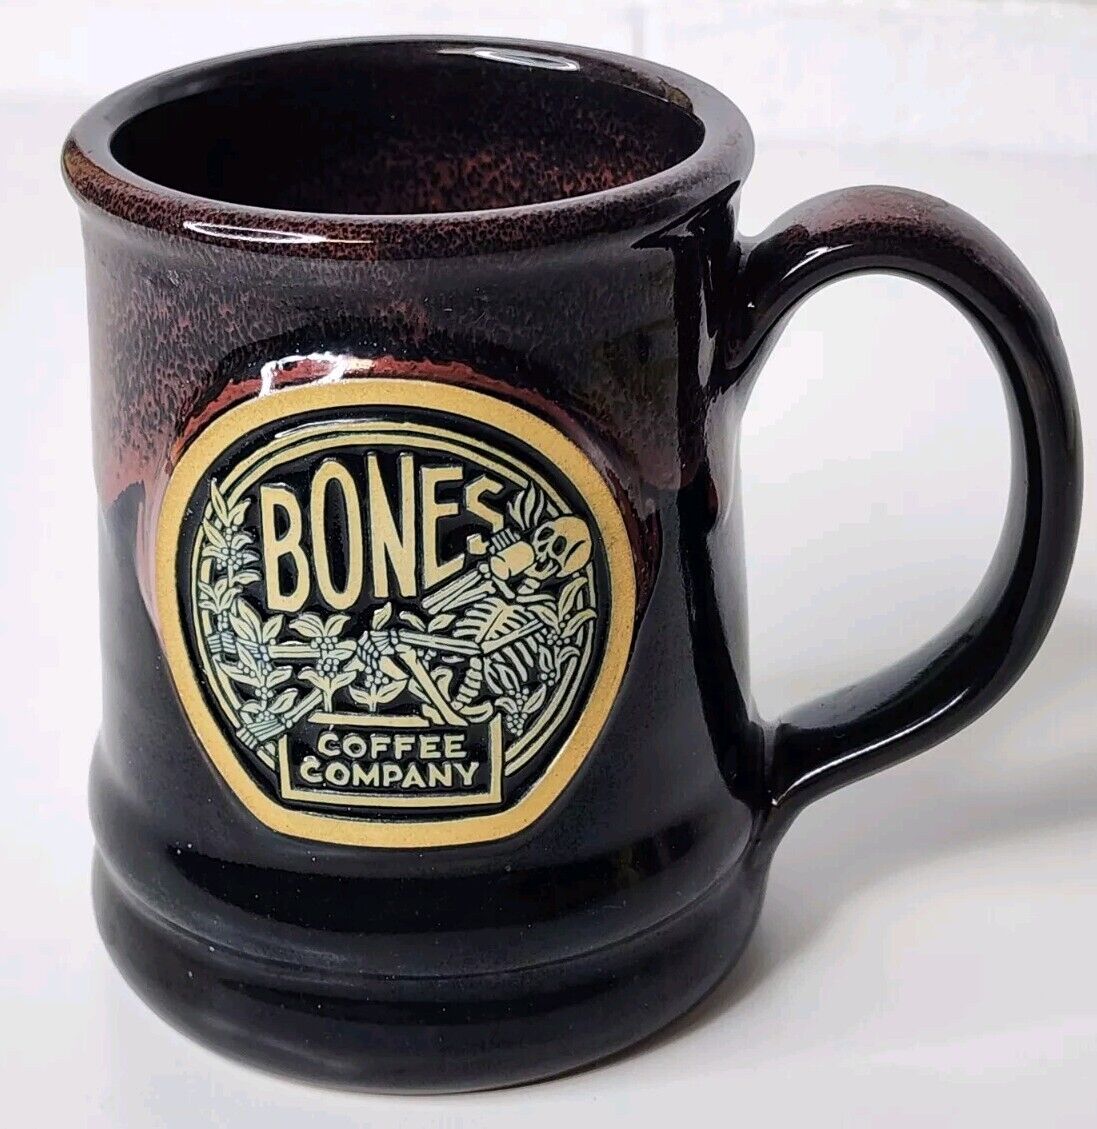 Bones Coffee Company Mug 2020 Skulls Flowers Relaxing